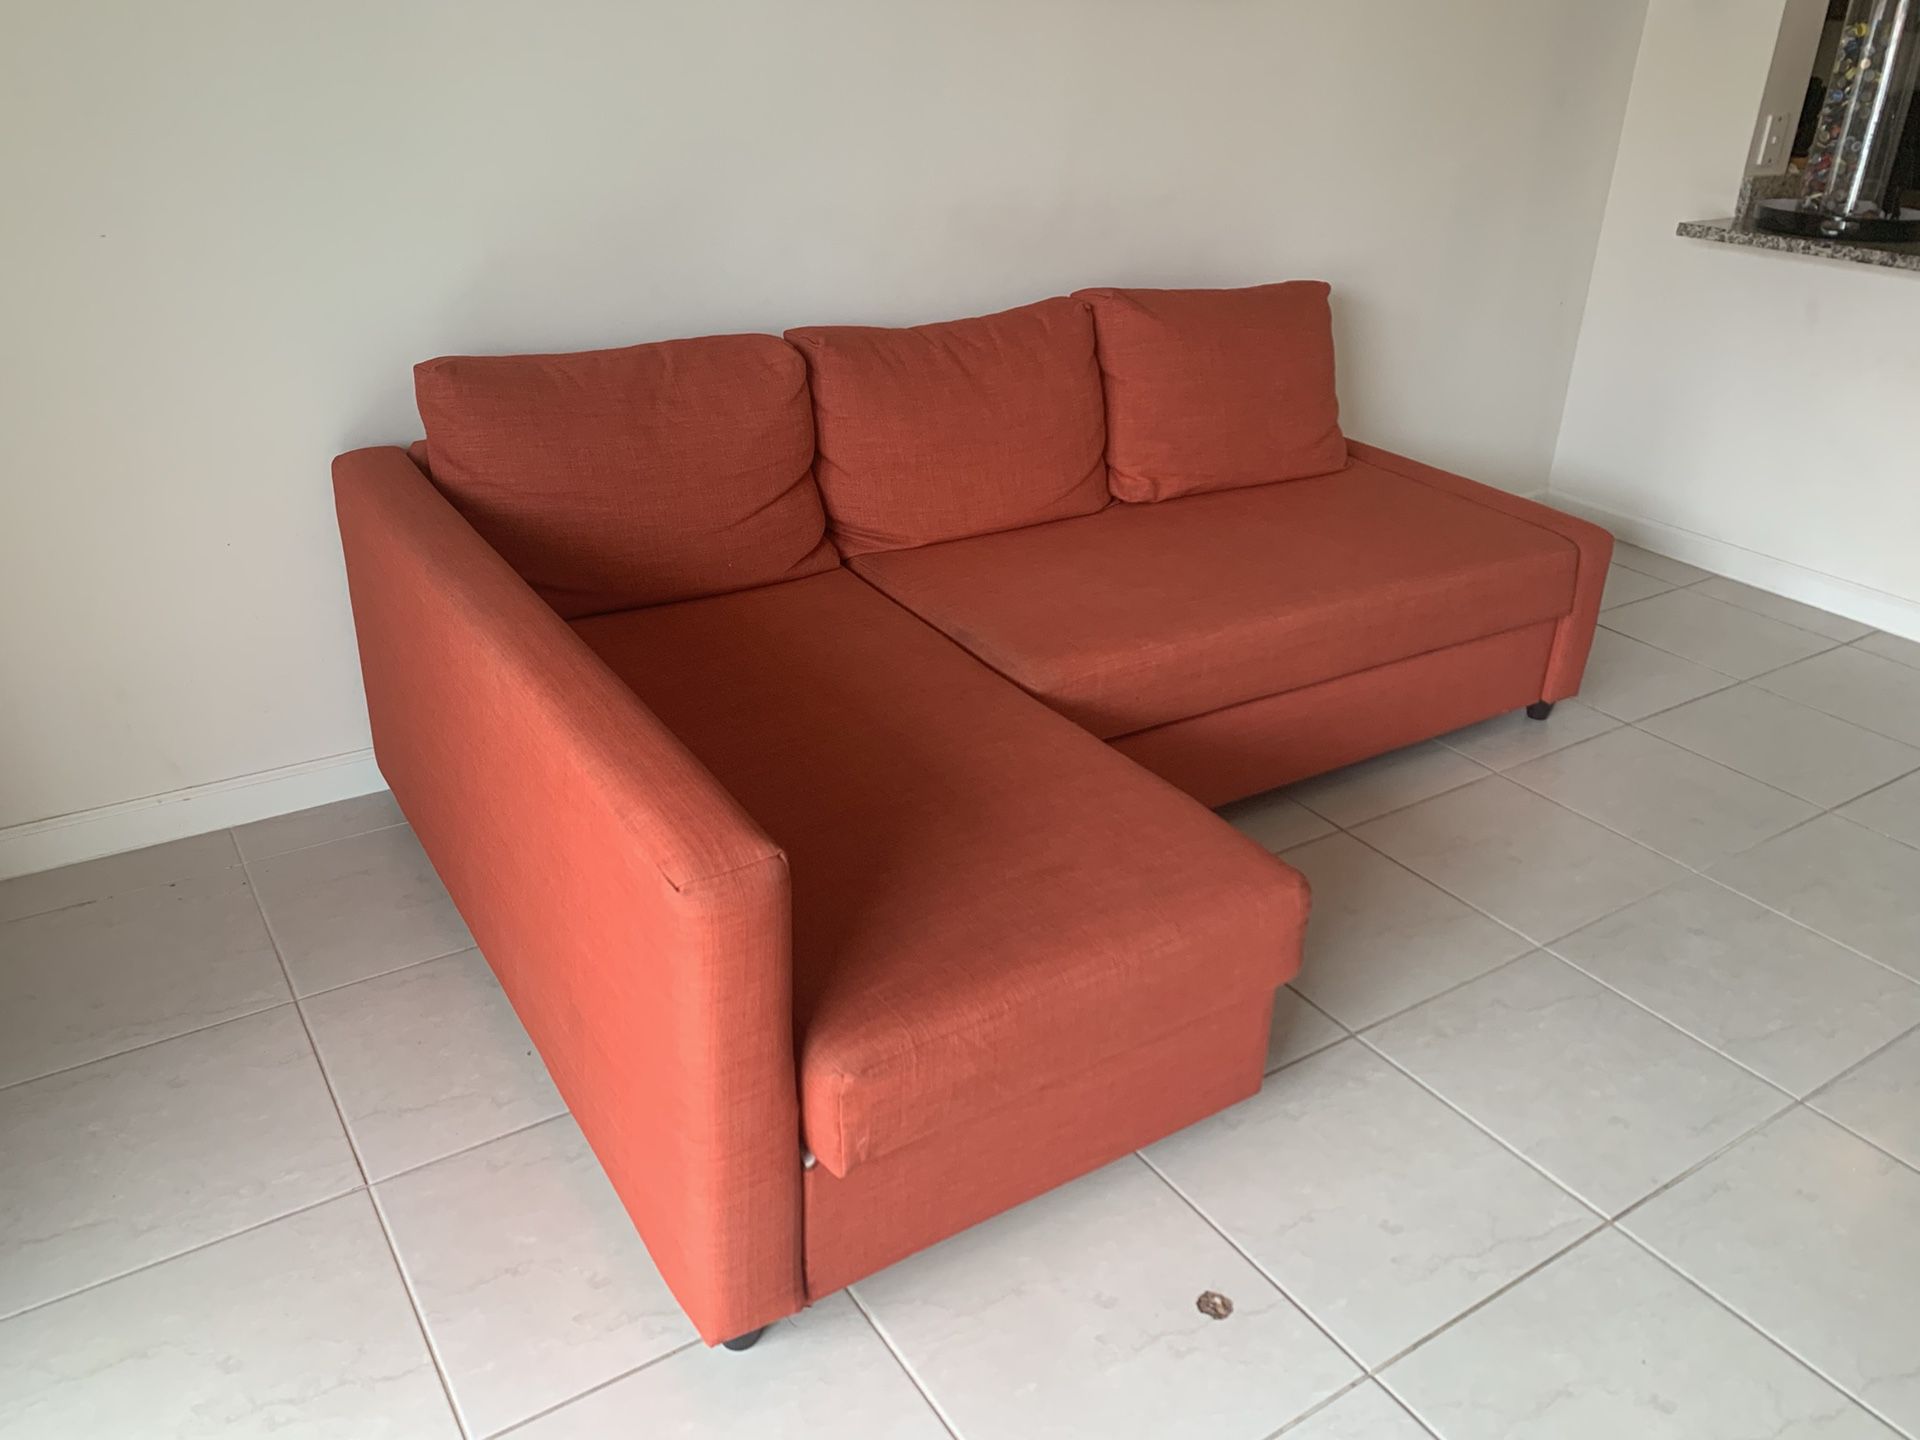 IKEA multipurpose couch- red orange